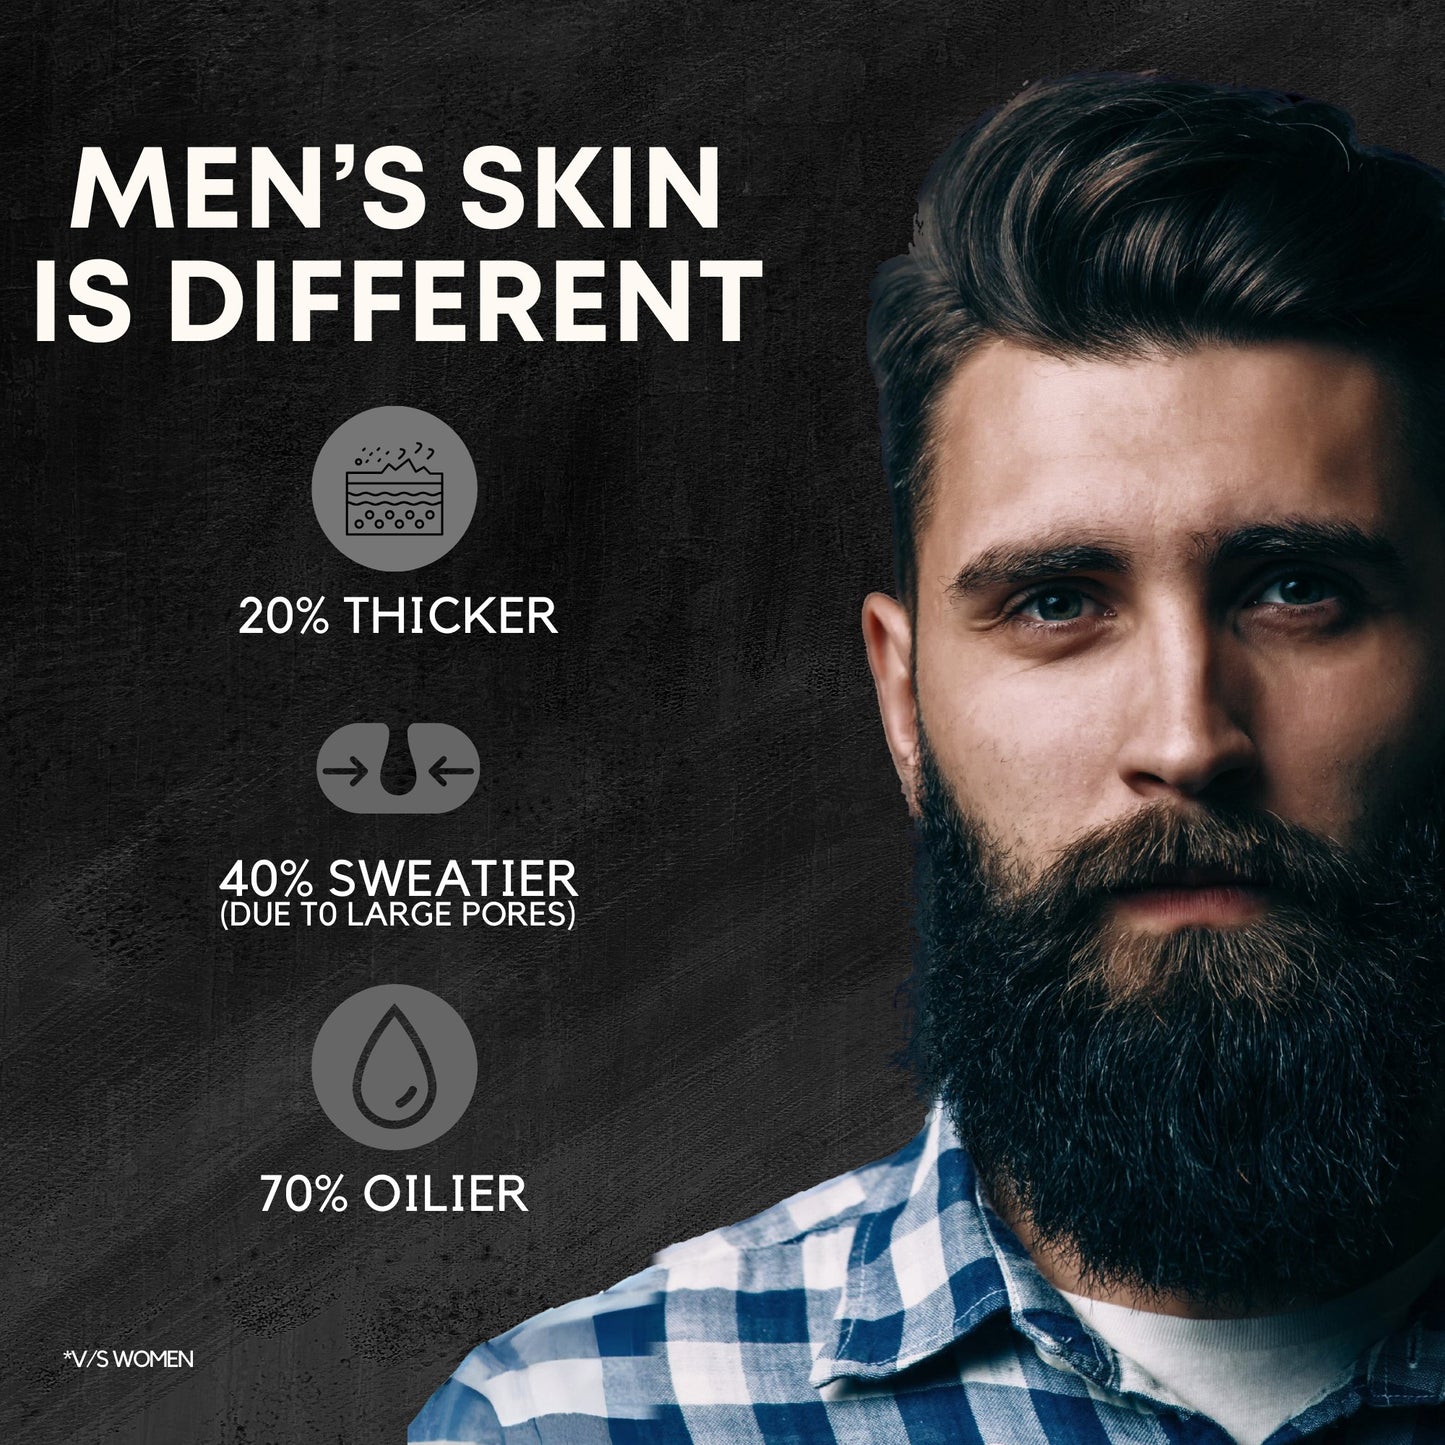 Coffee Face Scrub | Charcoal Face Mask | Beard Comb | COMBO PACK | For Men - Veraku